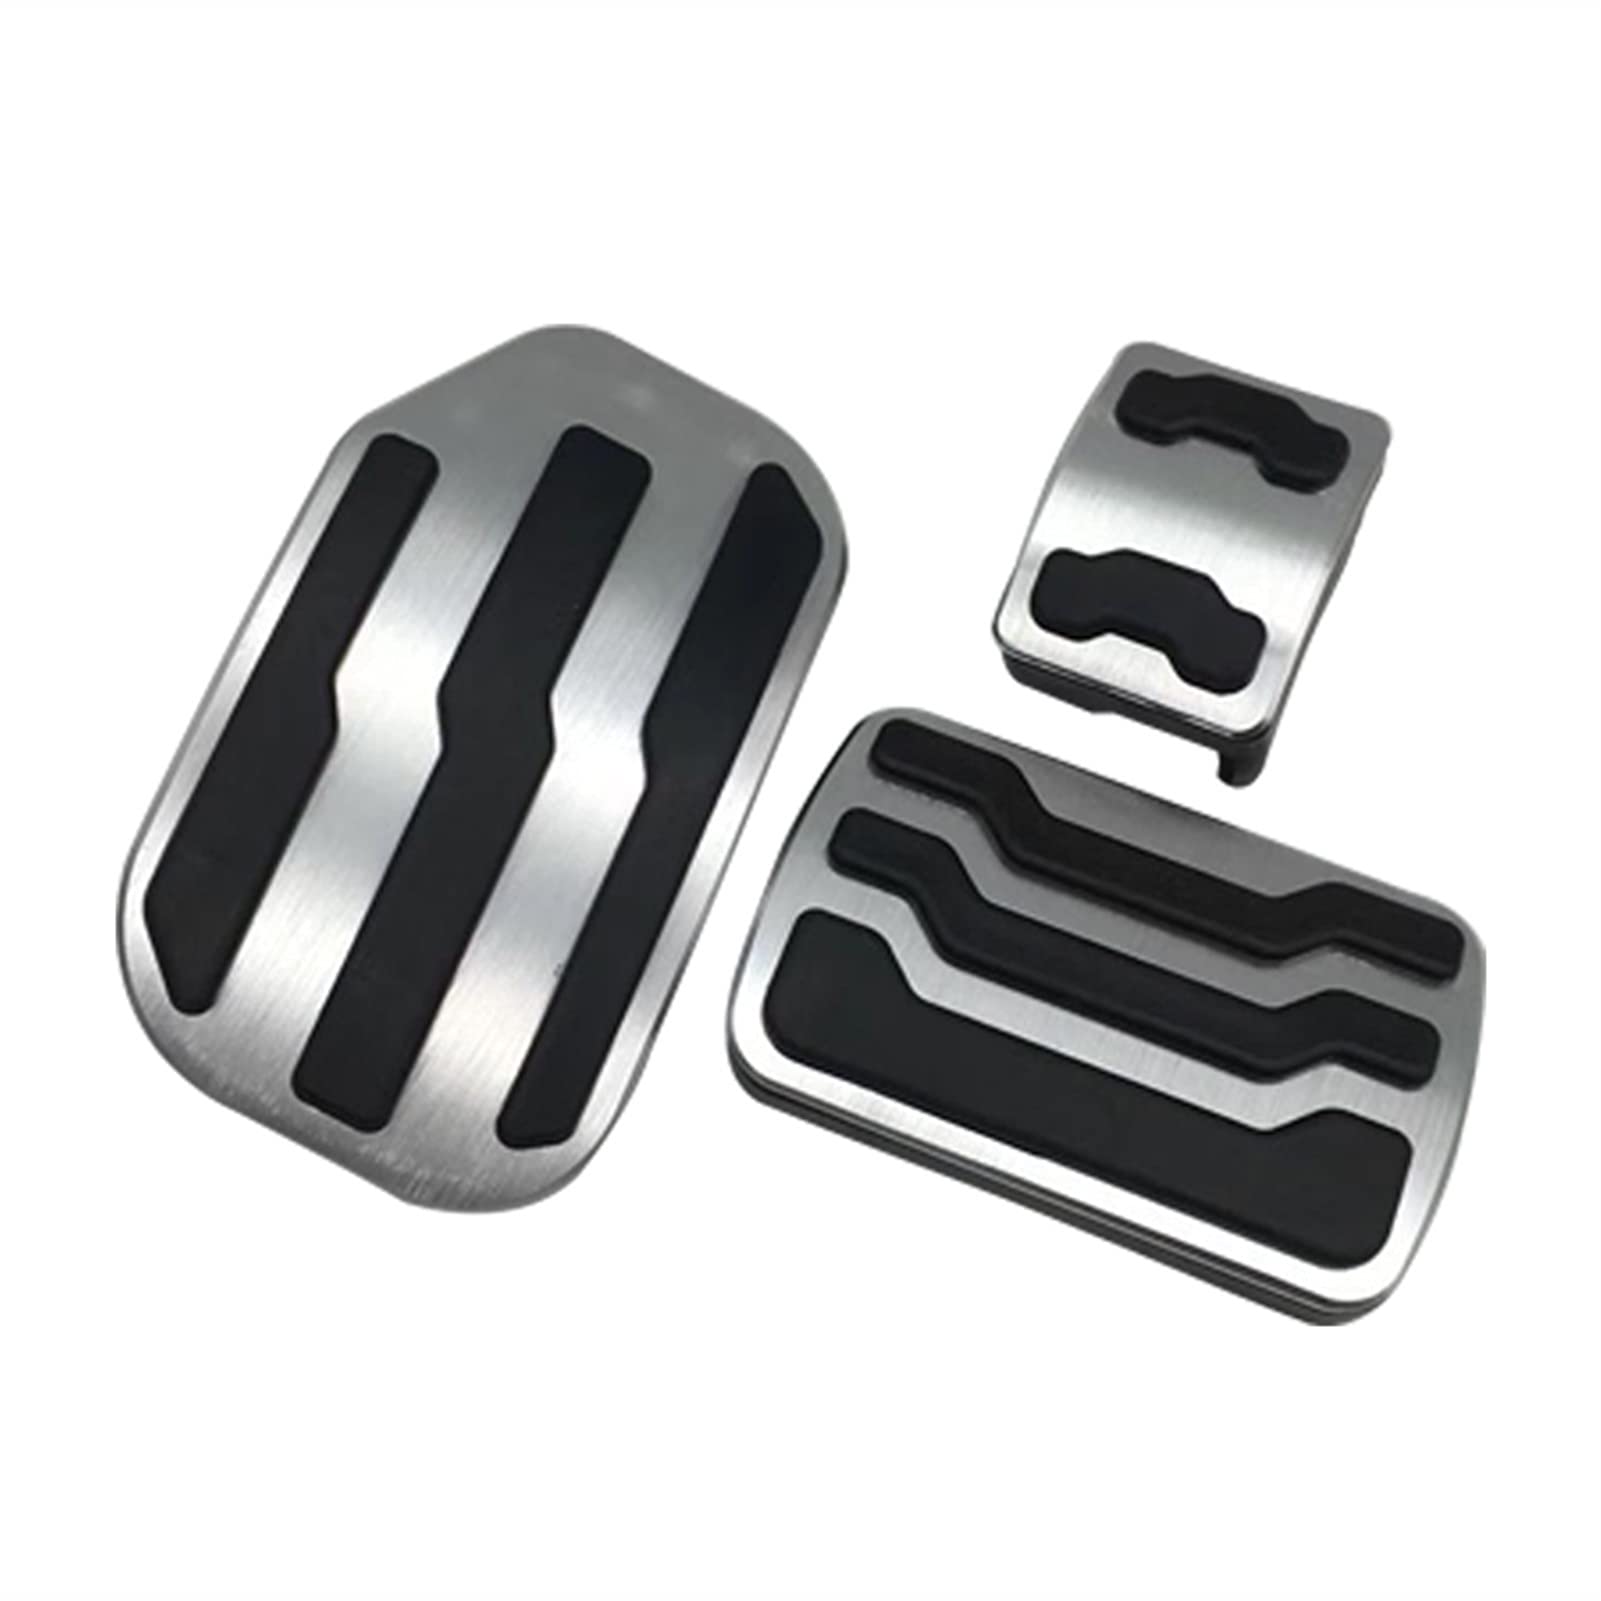 RIXENT Aluminiumlegierung Auto Gaspedal Kraftstoff Bremspedal Pad Mat Cover AT, for Ford, F150 F-150 Raptor 2015 2016 2017 2018 2019 Zubehör Fußpedalauflage(AT 3pcs) von RIXENT